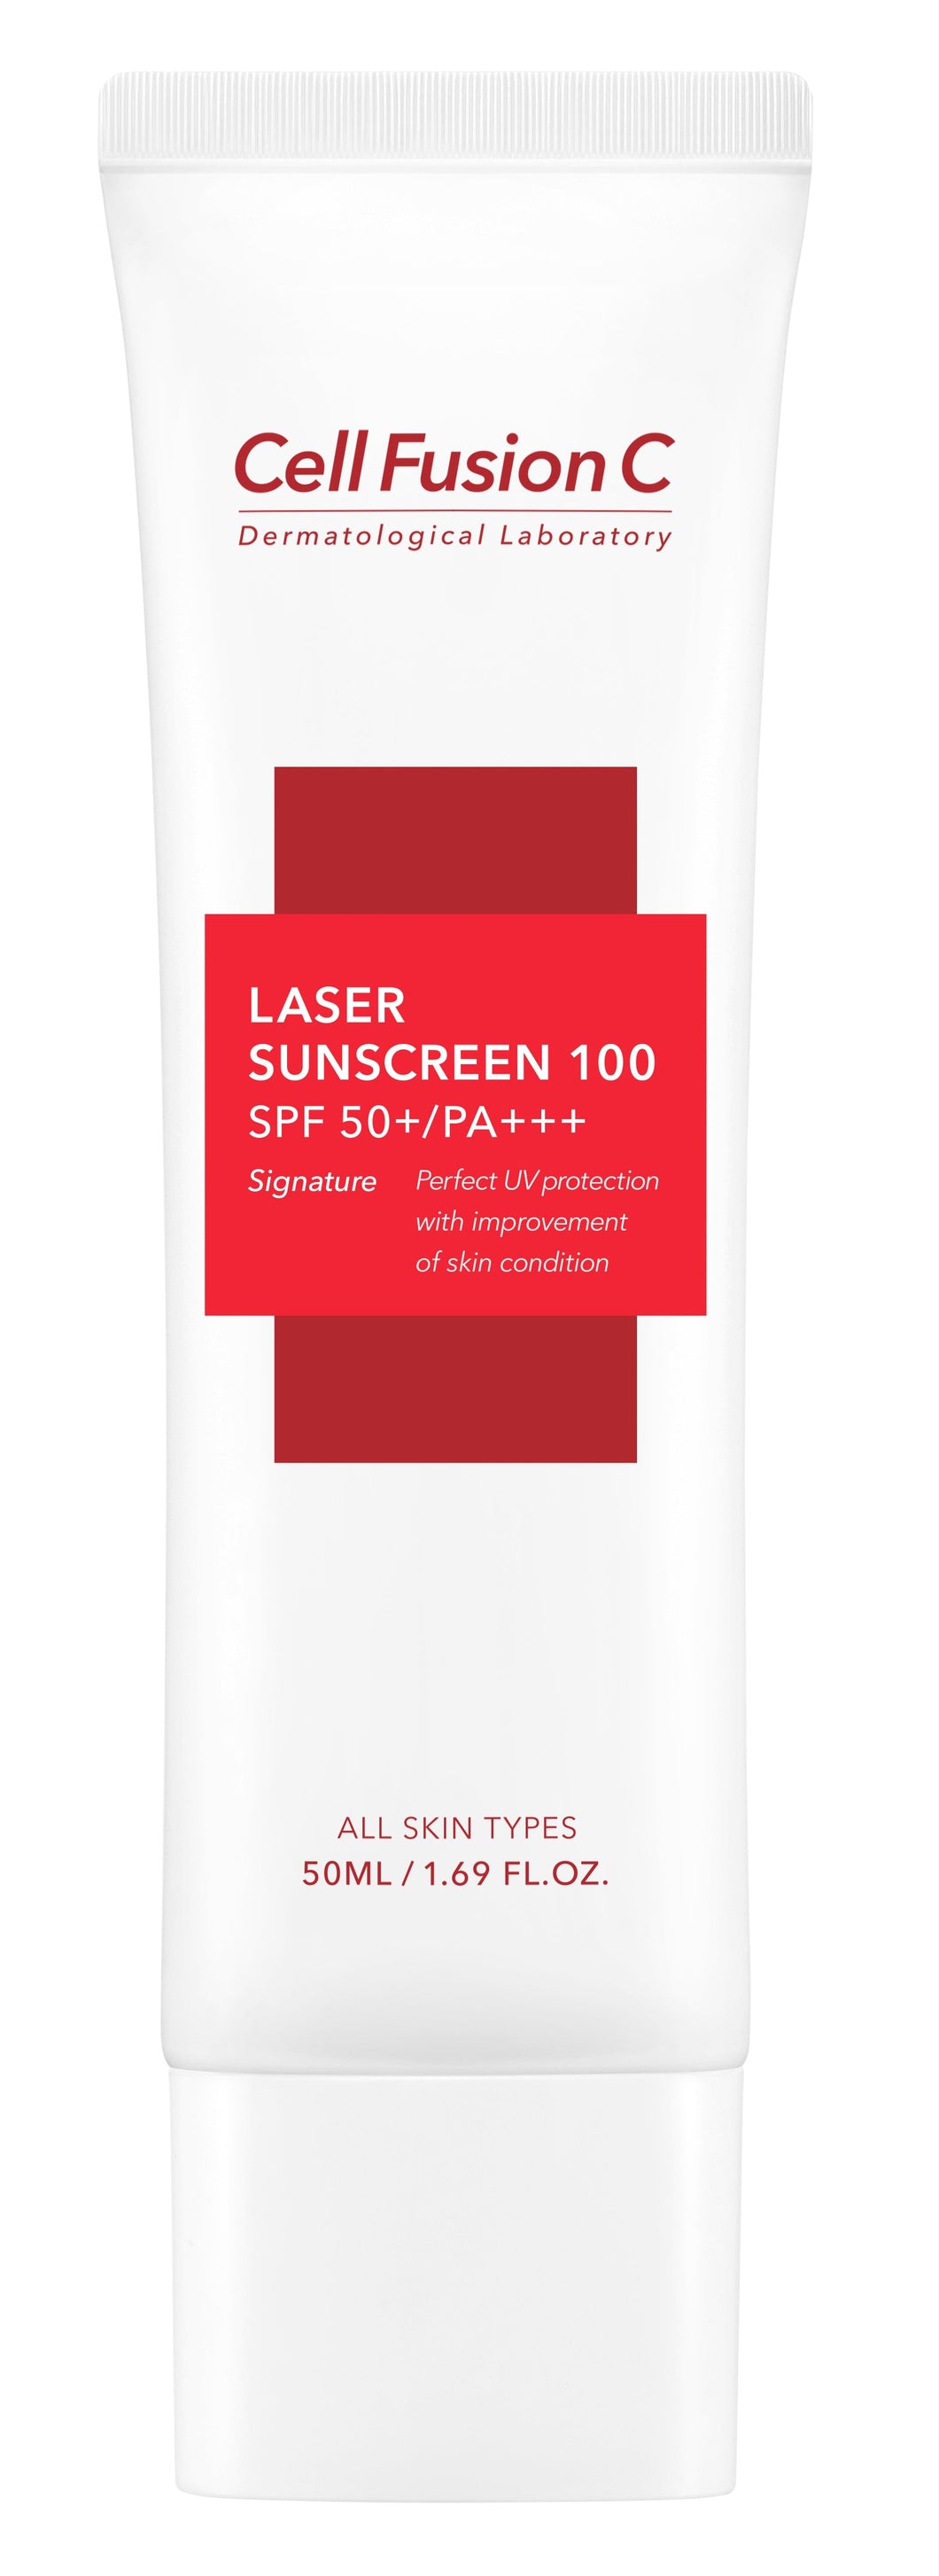 Laser Sunscreen 100 SPF50+/PA+++ - 50ml